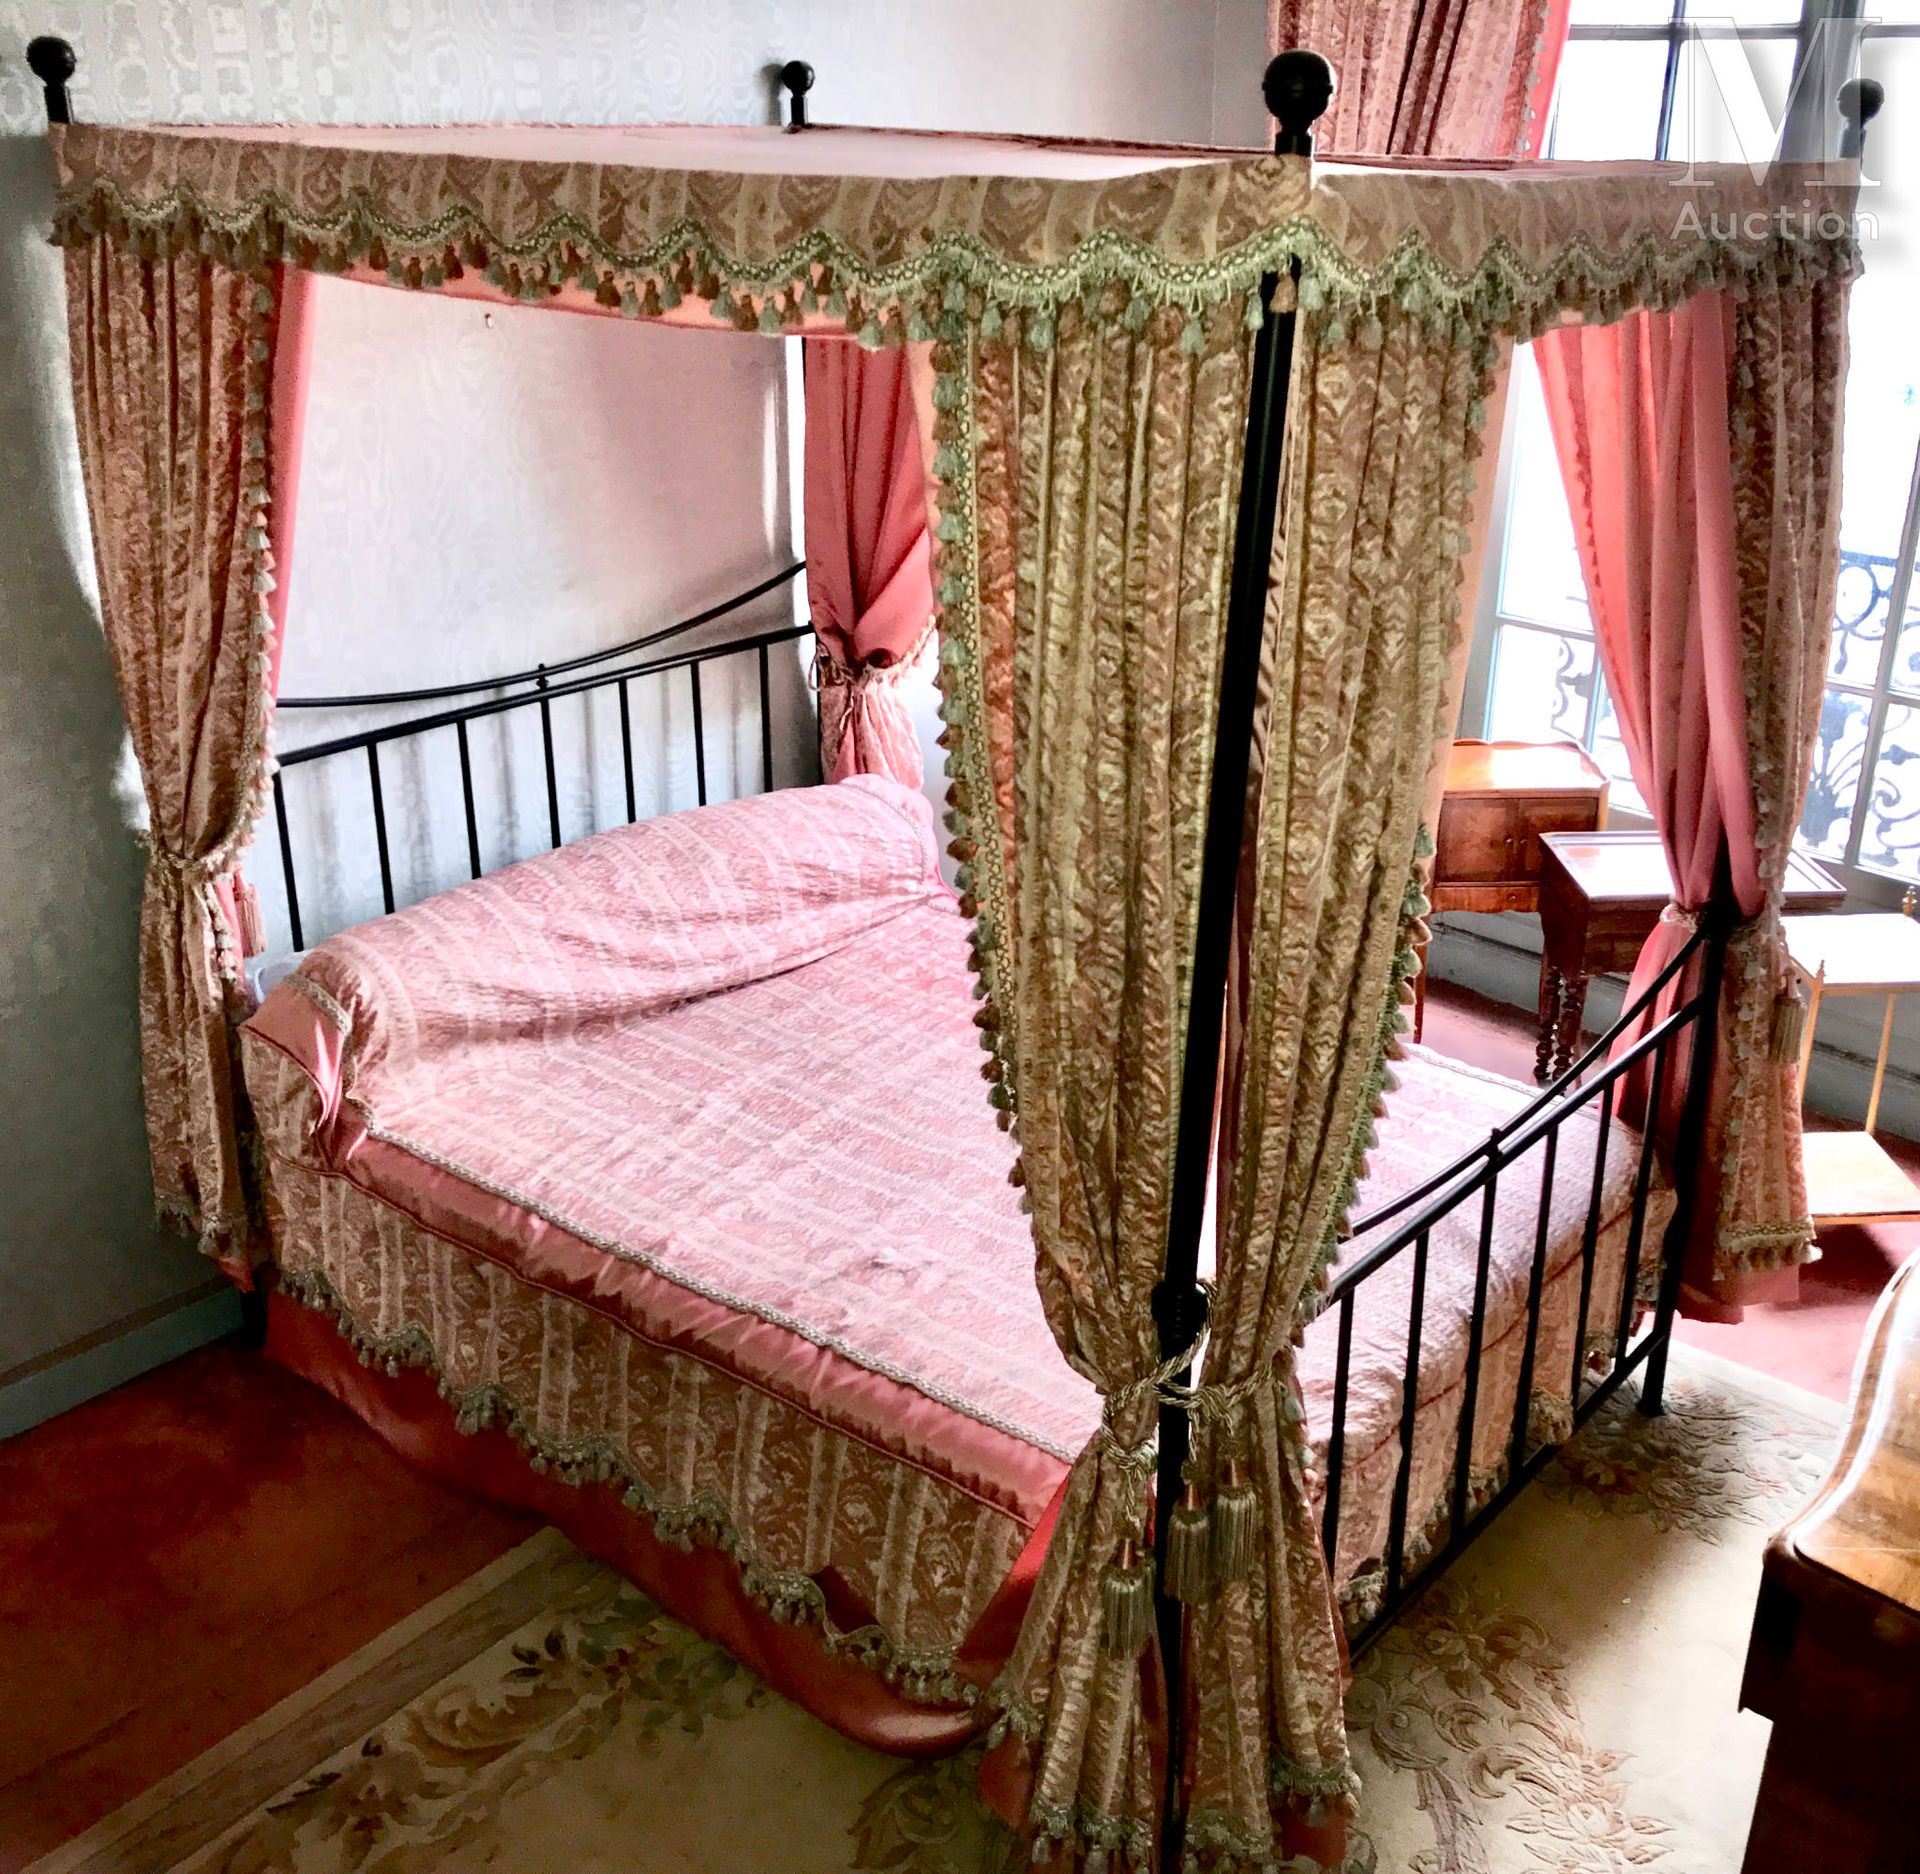 Lit de princesse 黑漆金属天幕床，带镂空栏杆，有一个大的粉色装饰和带流苏的多色装饰楣条的窗帘；带床垫。 
高：205，宽：140，深：195厘米